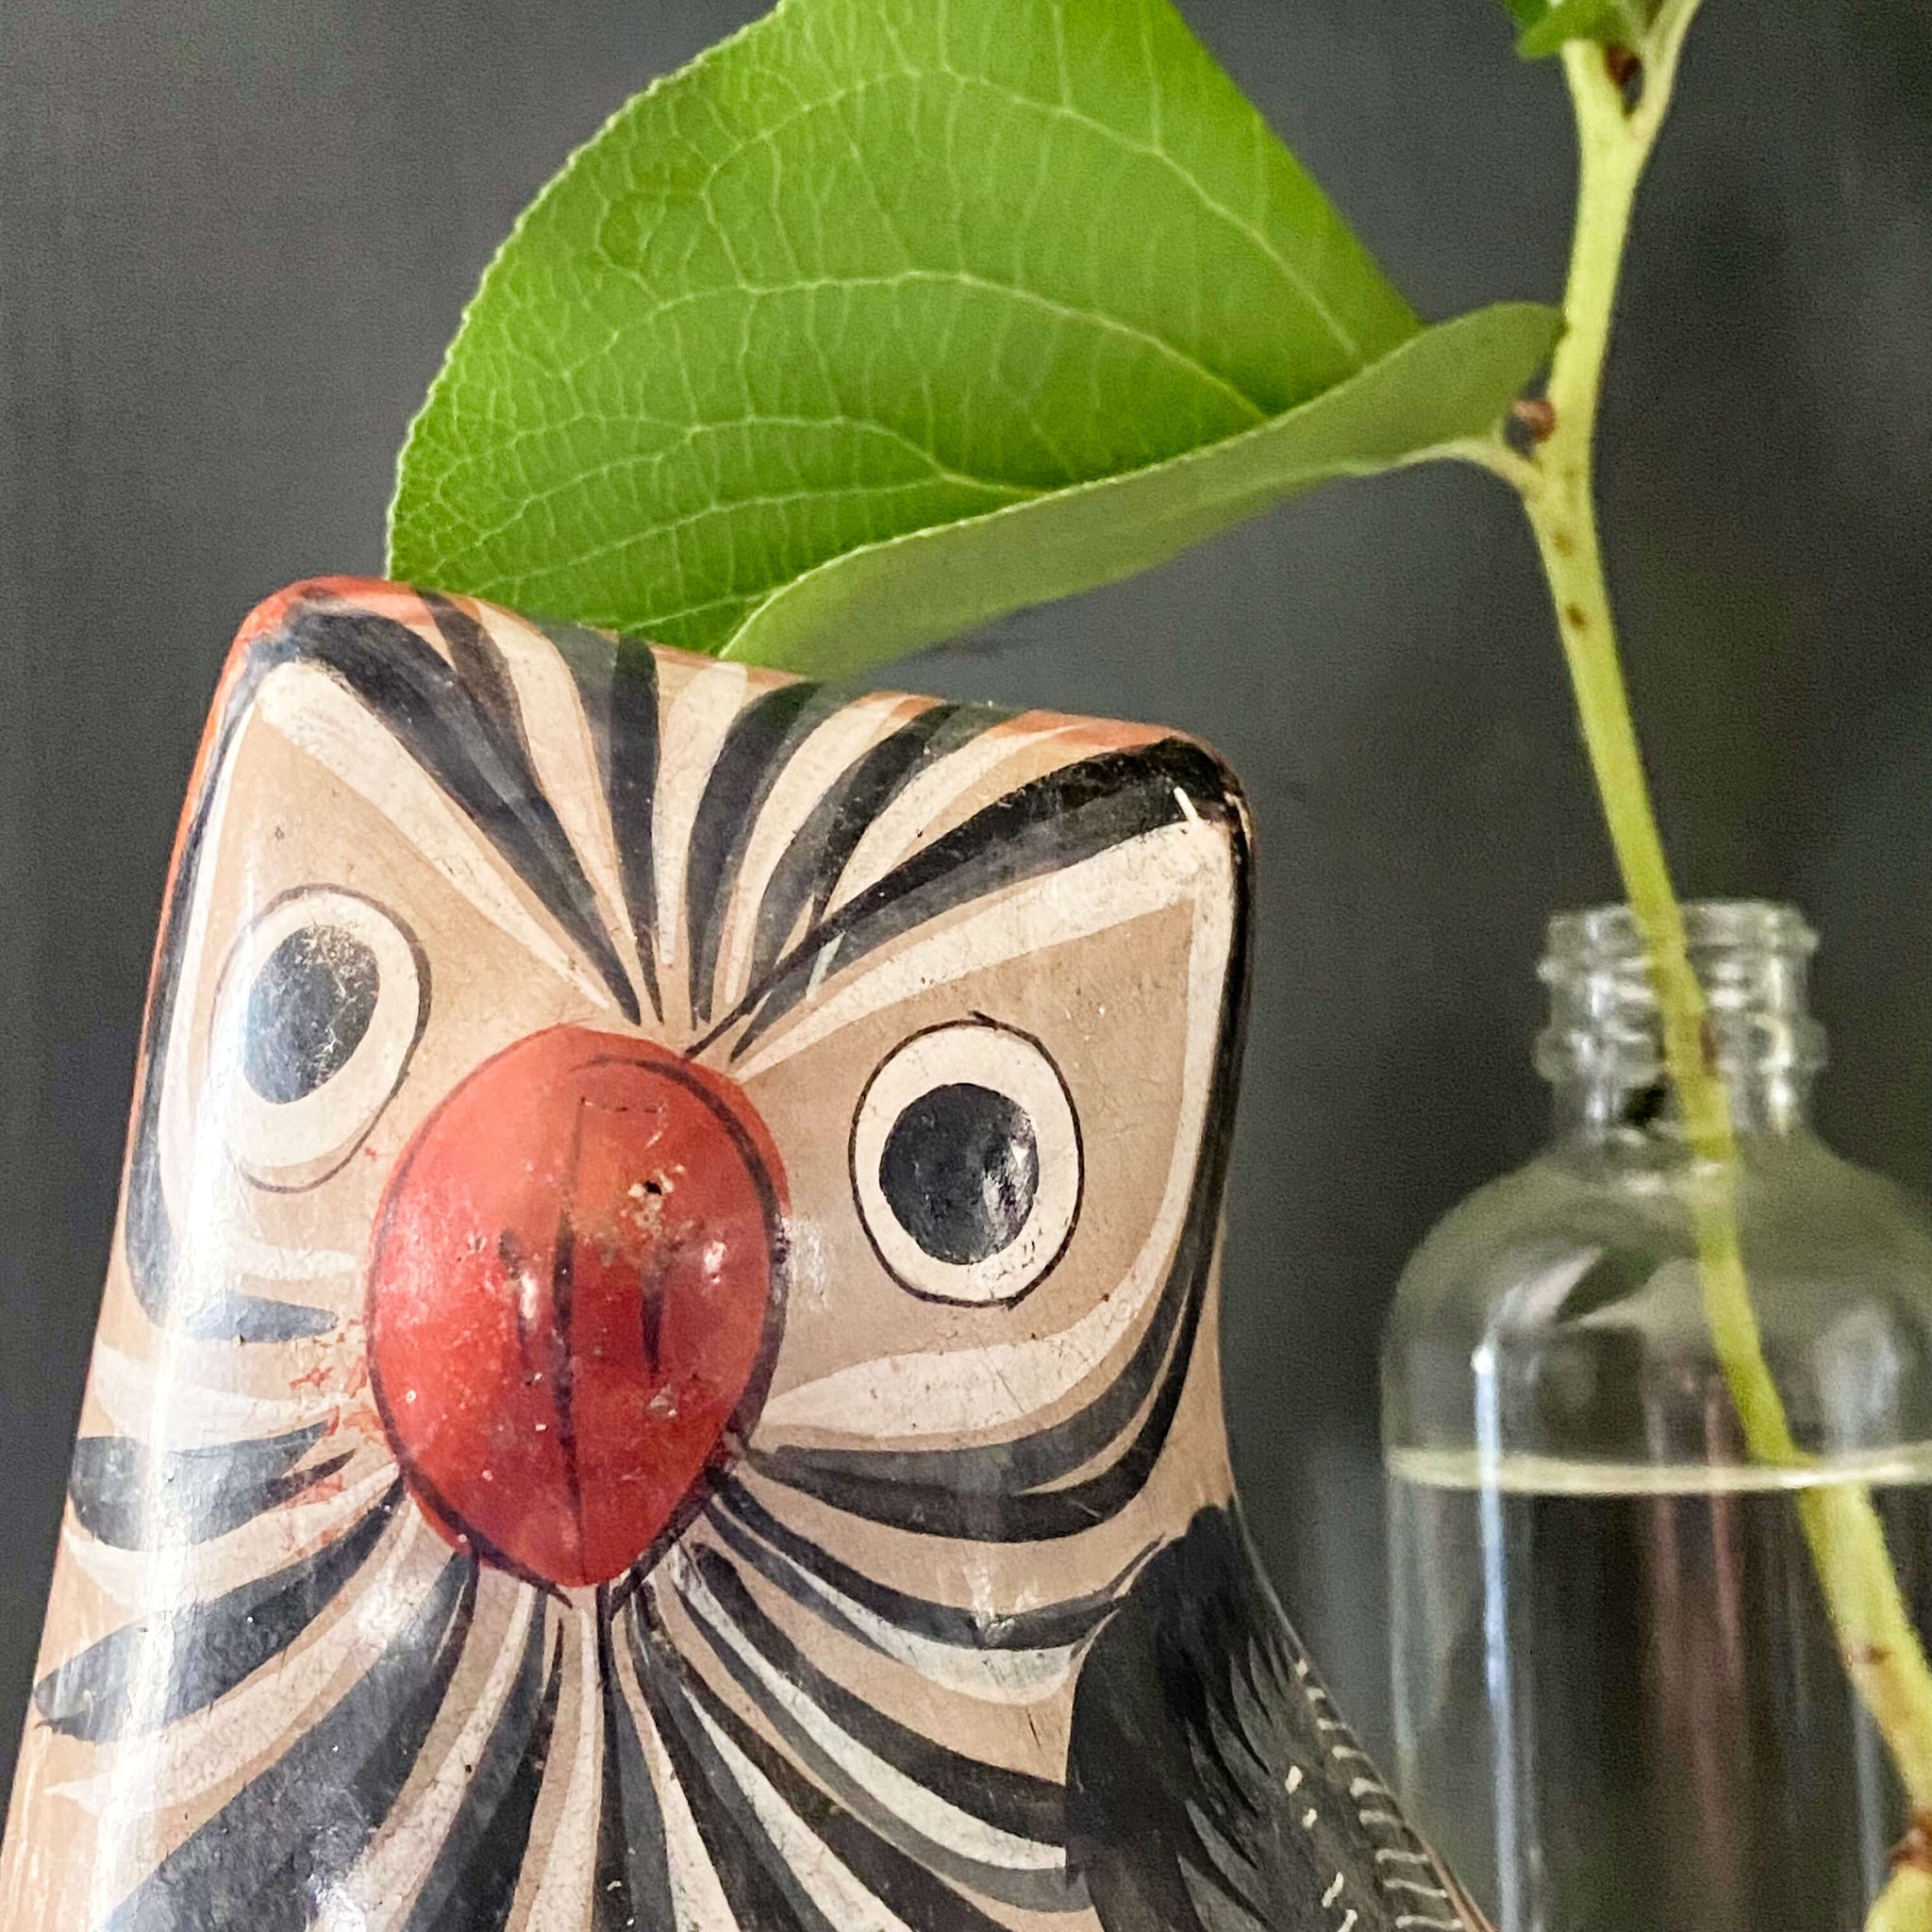 Vintage Mexican Pottery Owl - Tonala Clay Handpainted Folk Art Bird